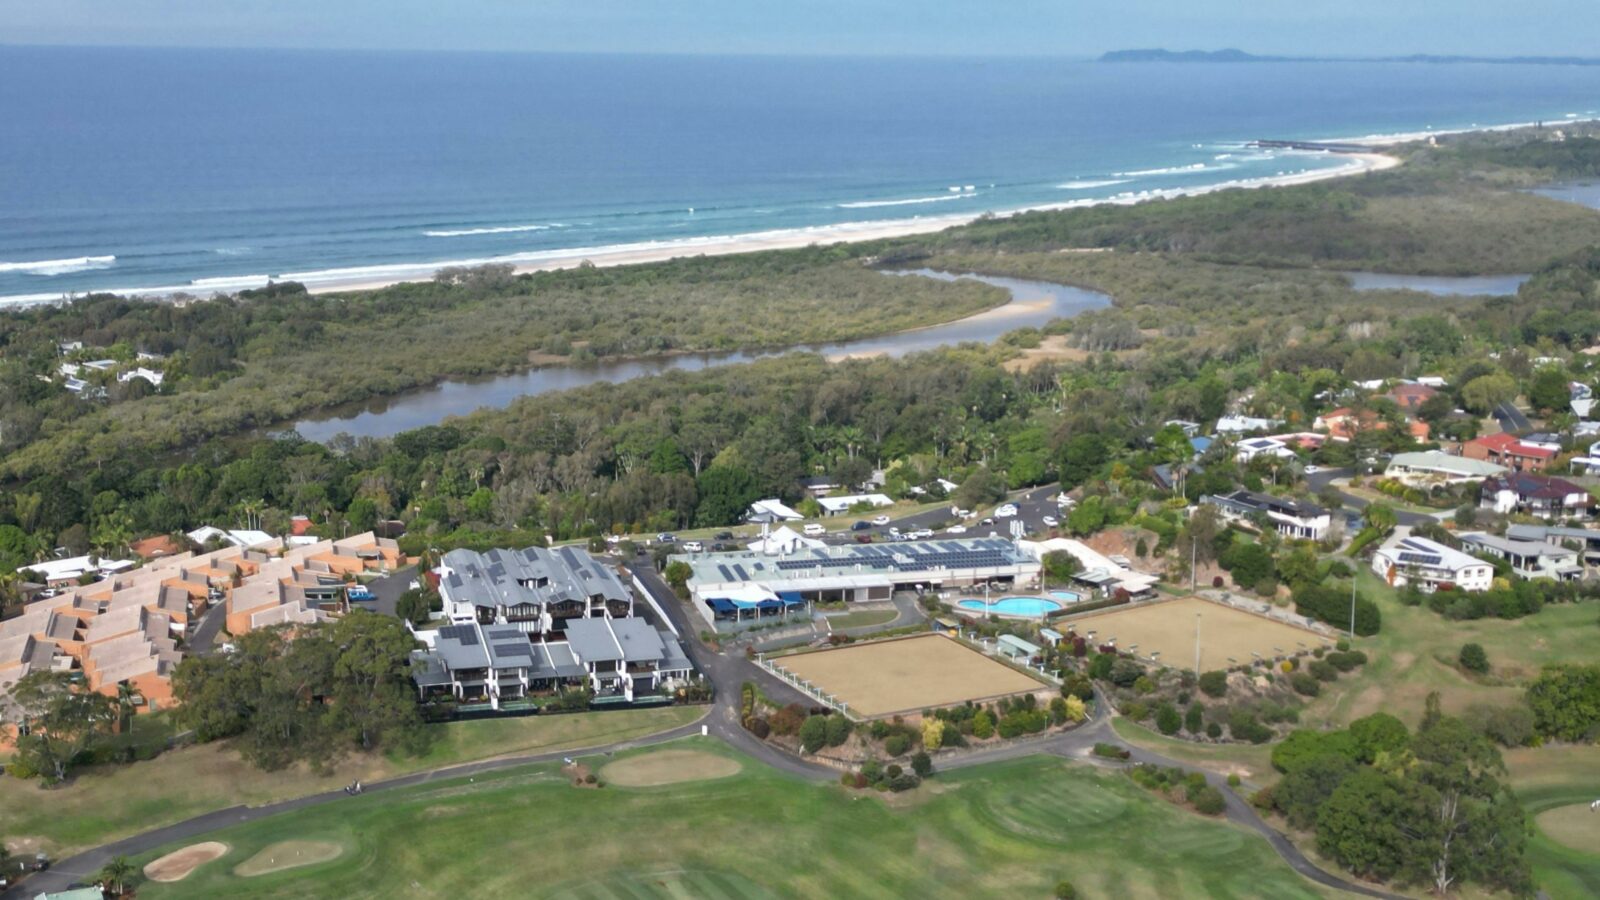 Aerial view of Club to Byron Bay